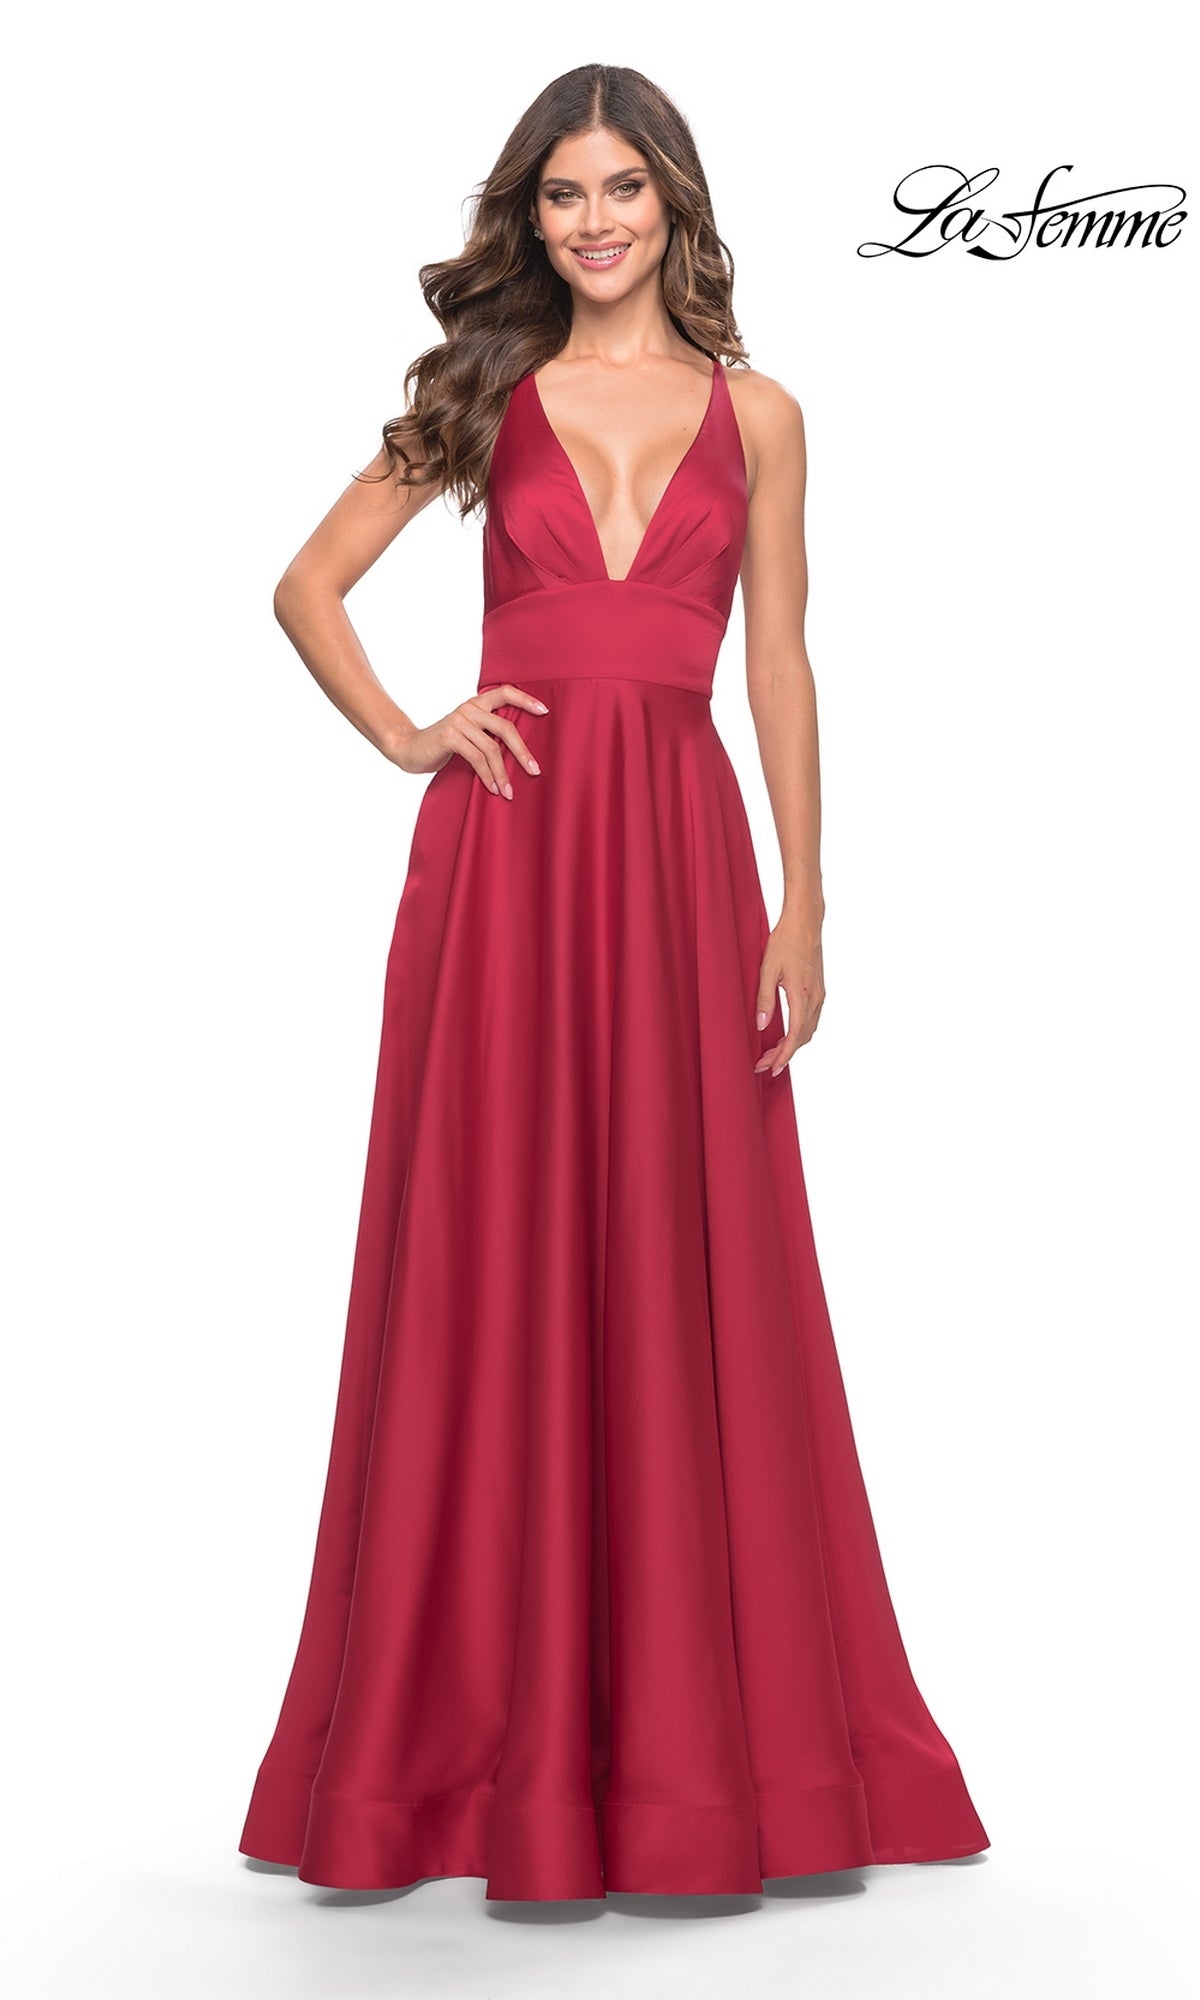  La Femme 31533 Formal Prom Dress